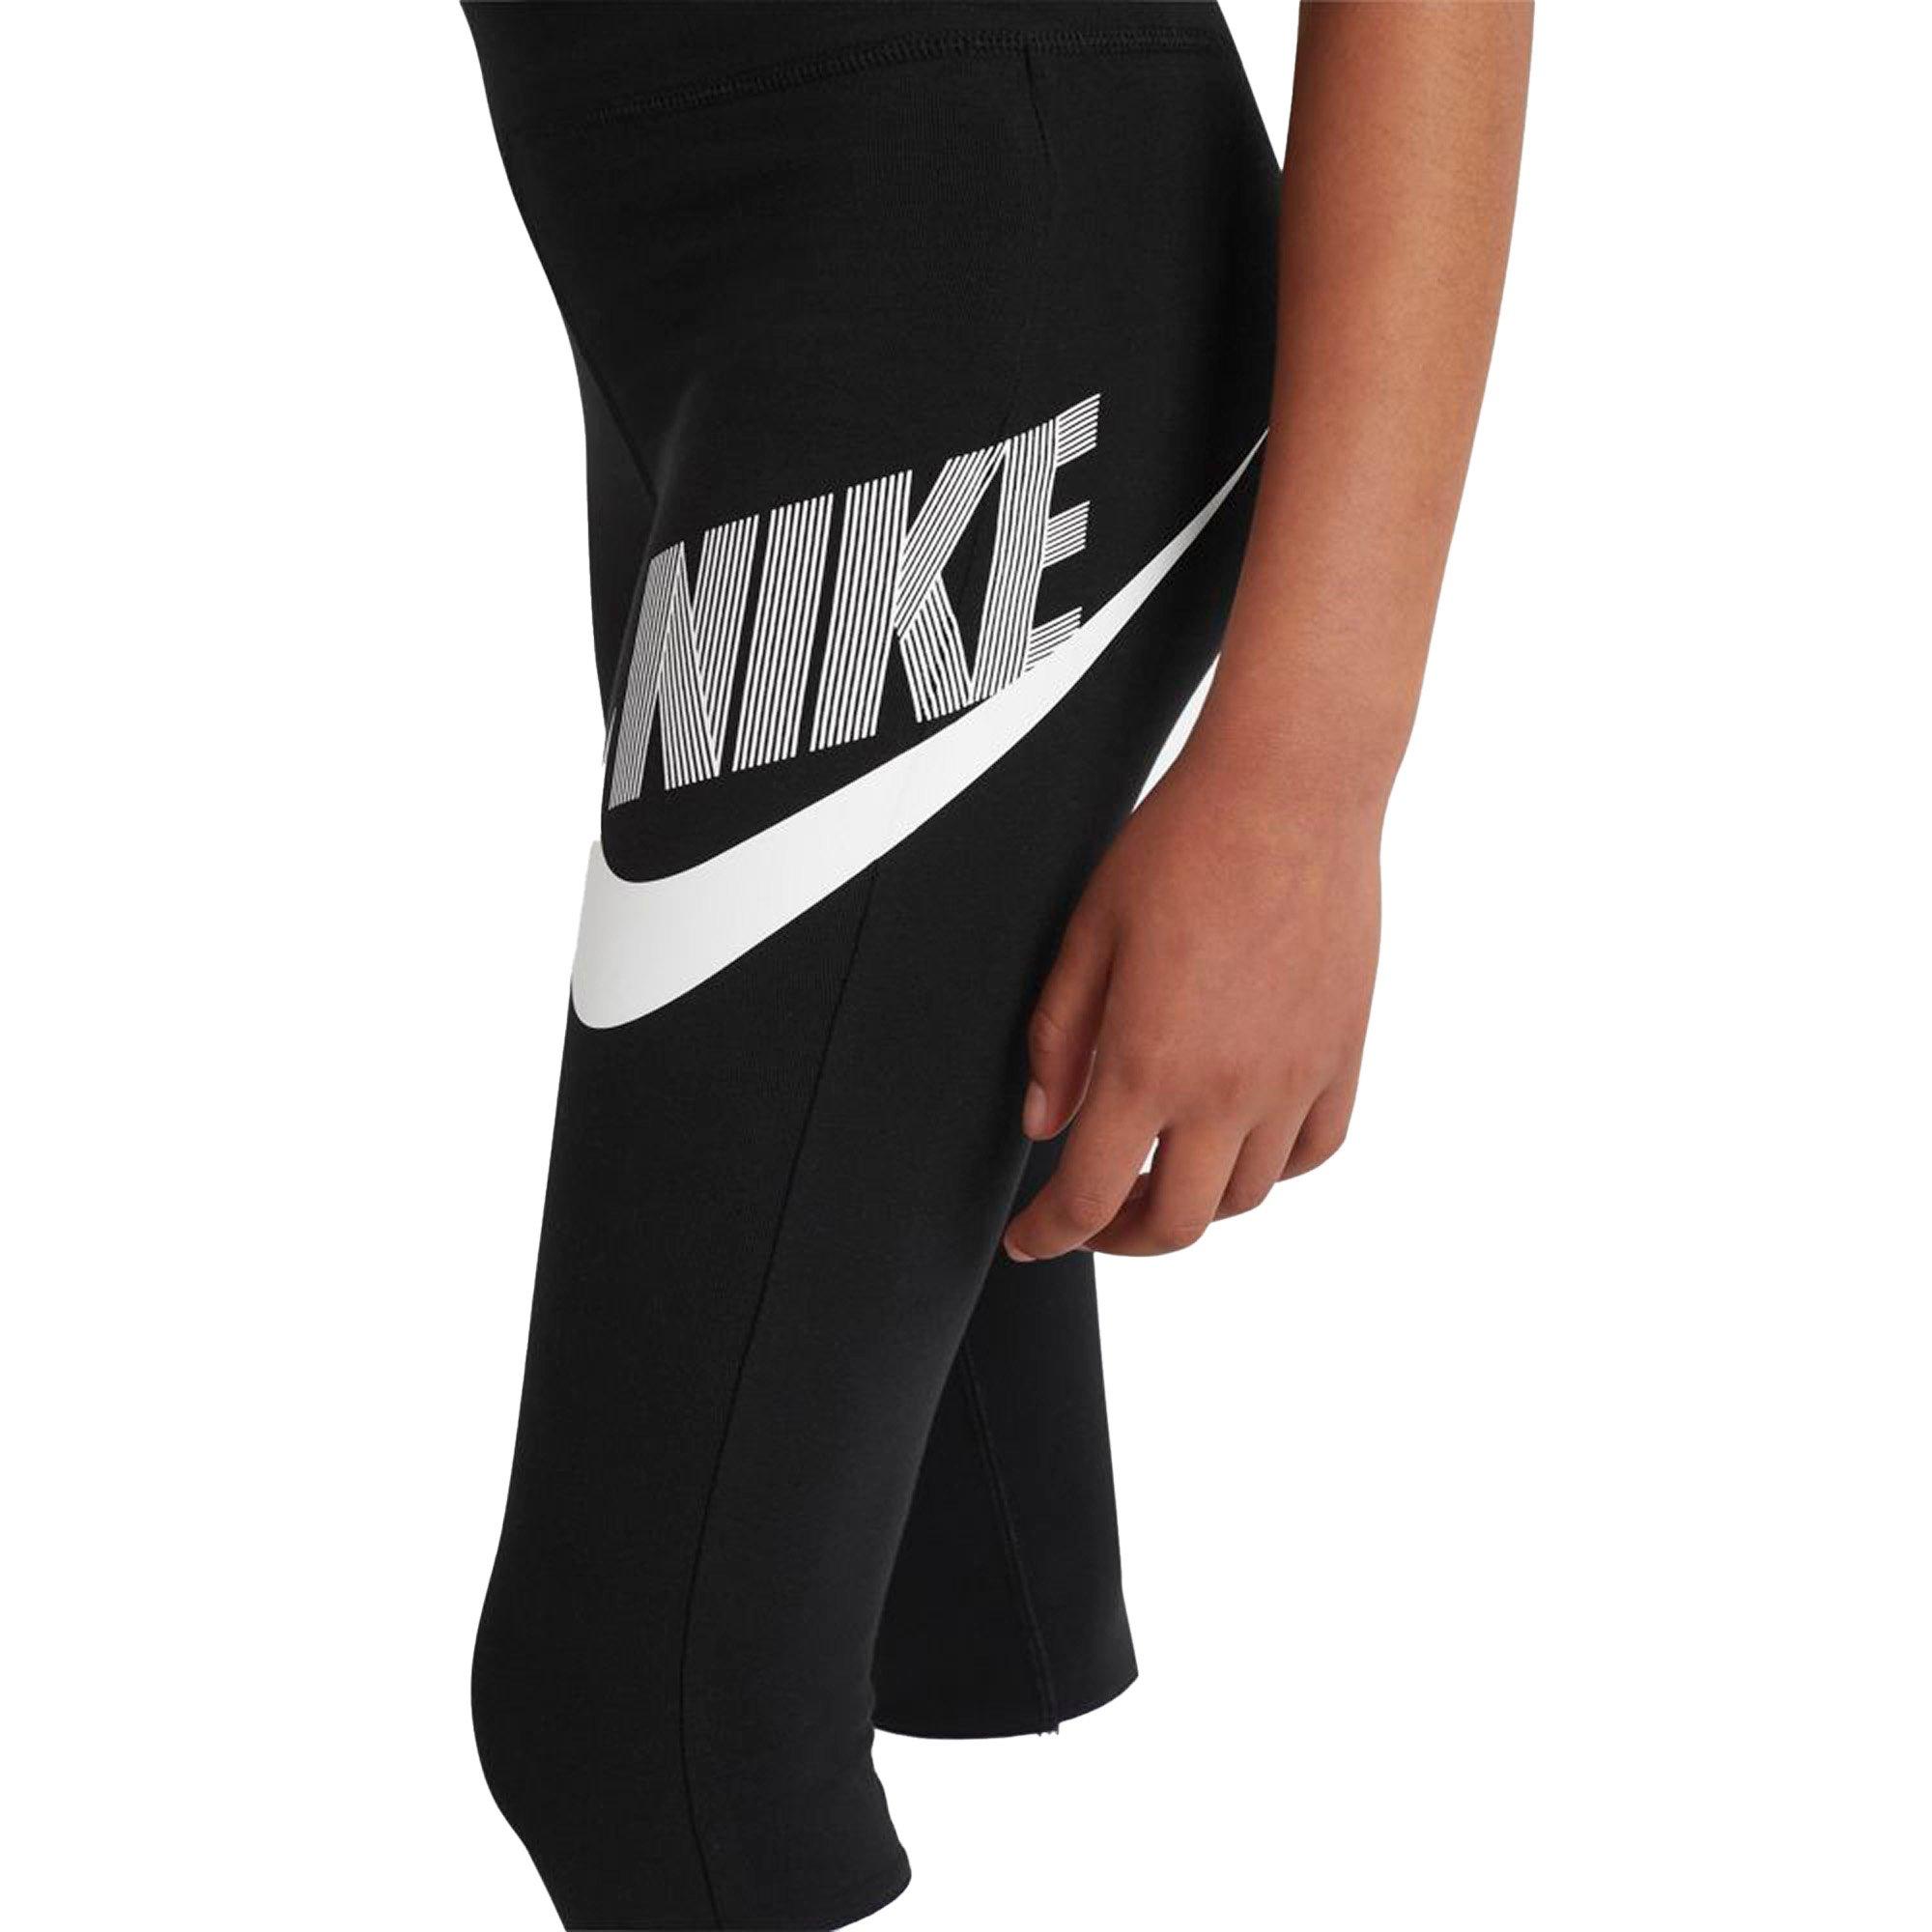 Worden Iets Weglaten Nike Girl's Gel Favorite Leggings